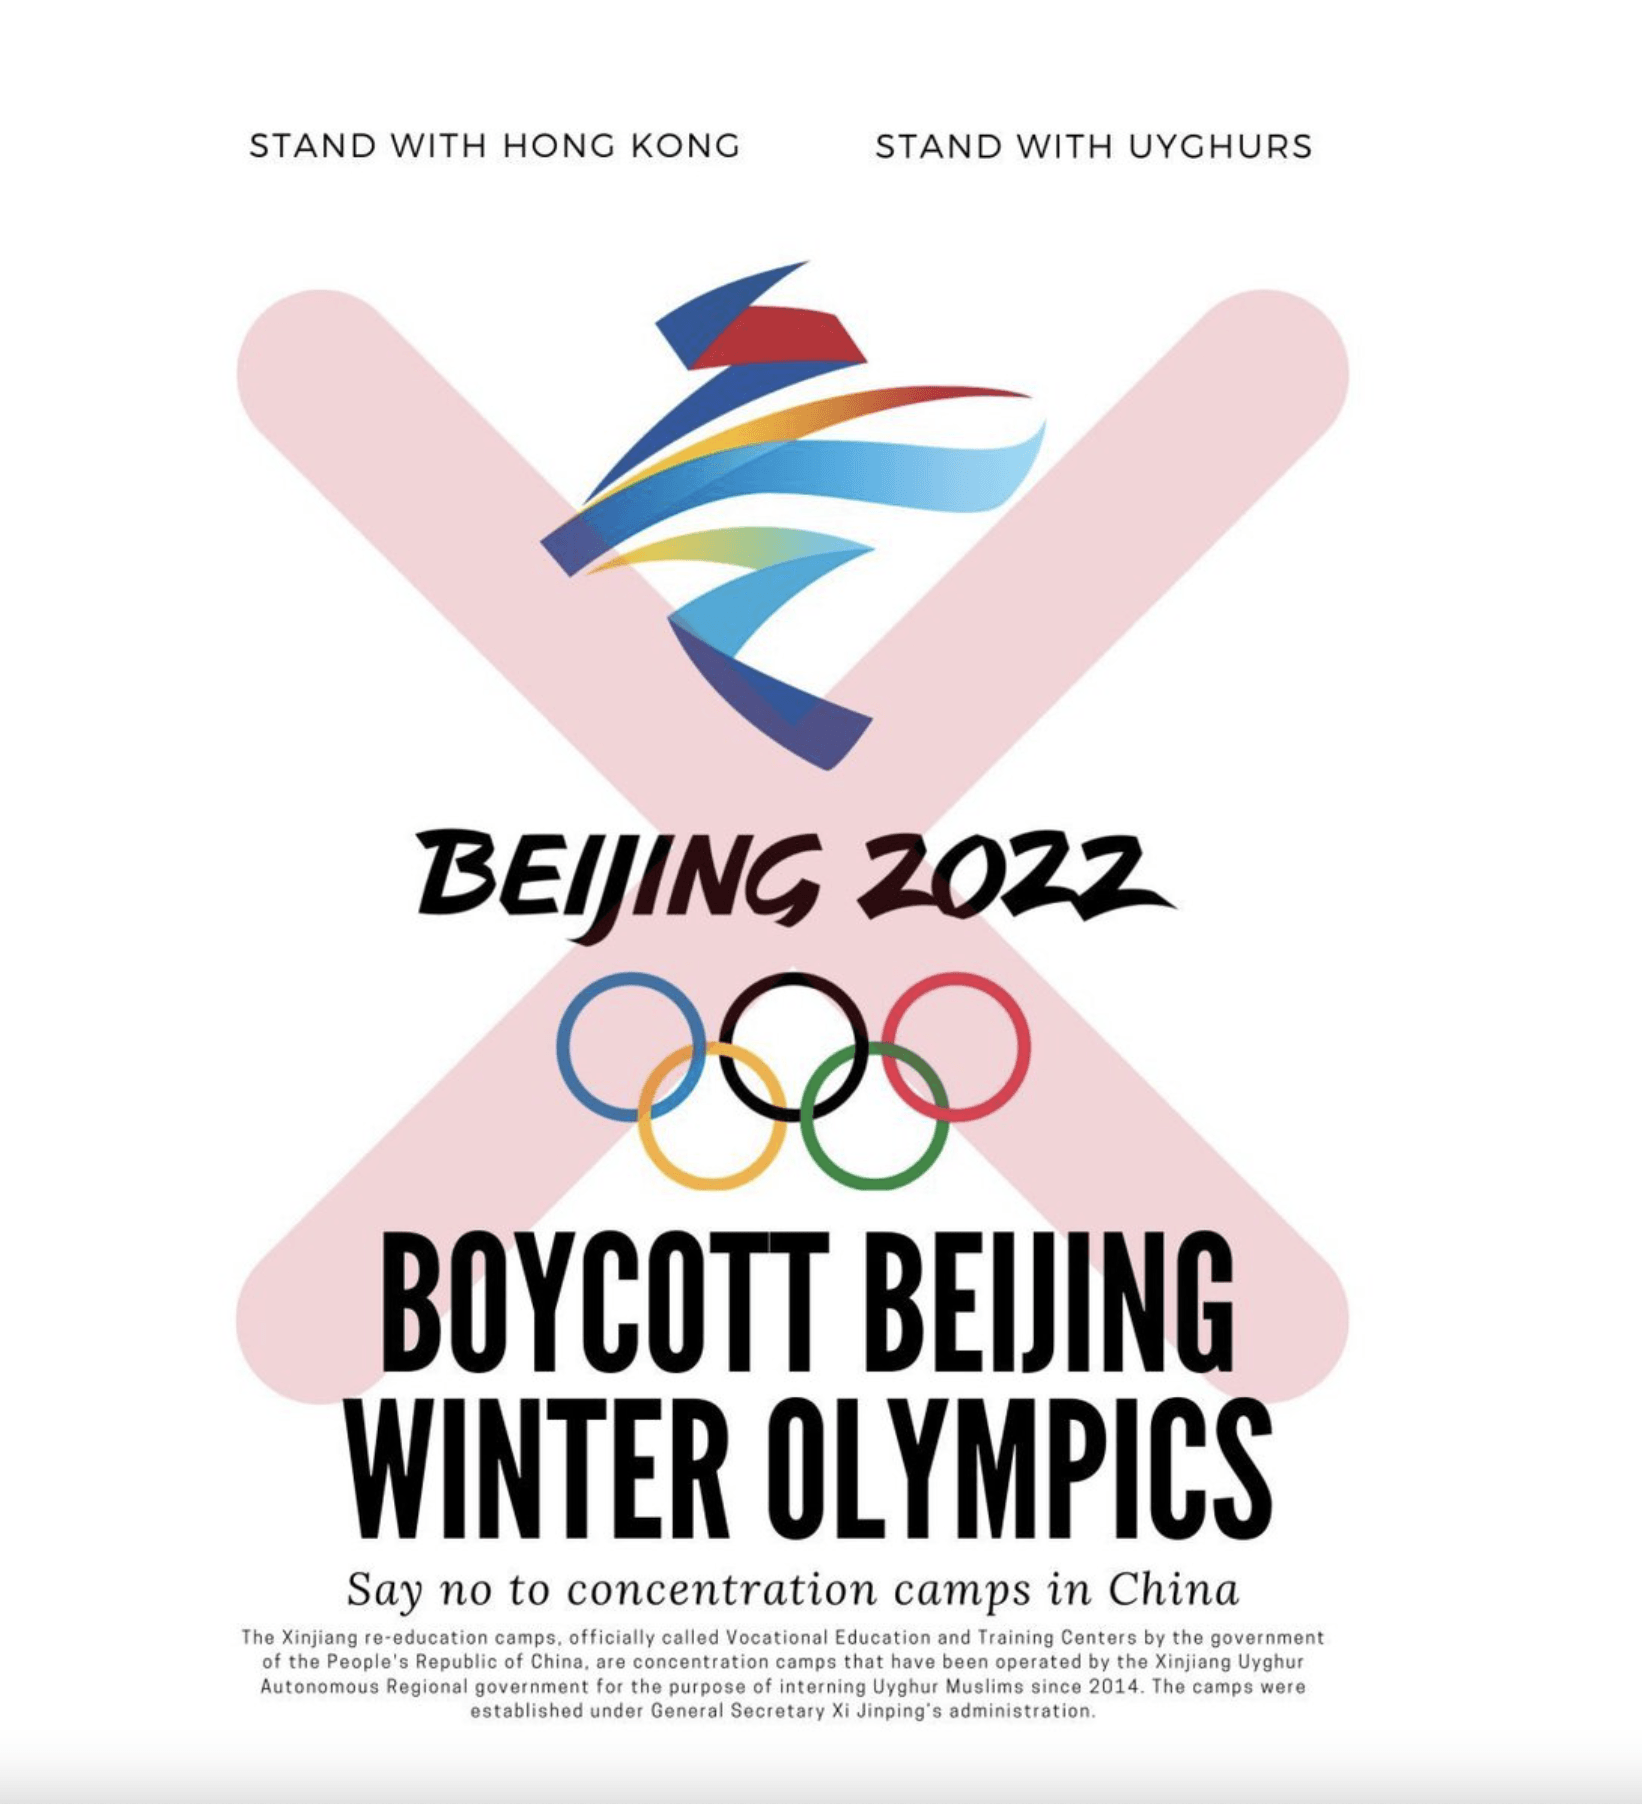 Boycott of the 2022 Olympics